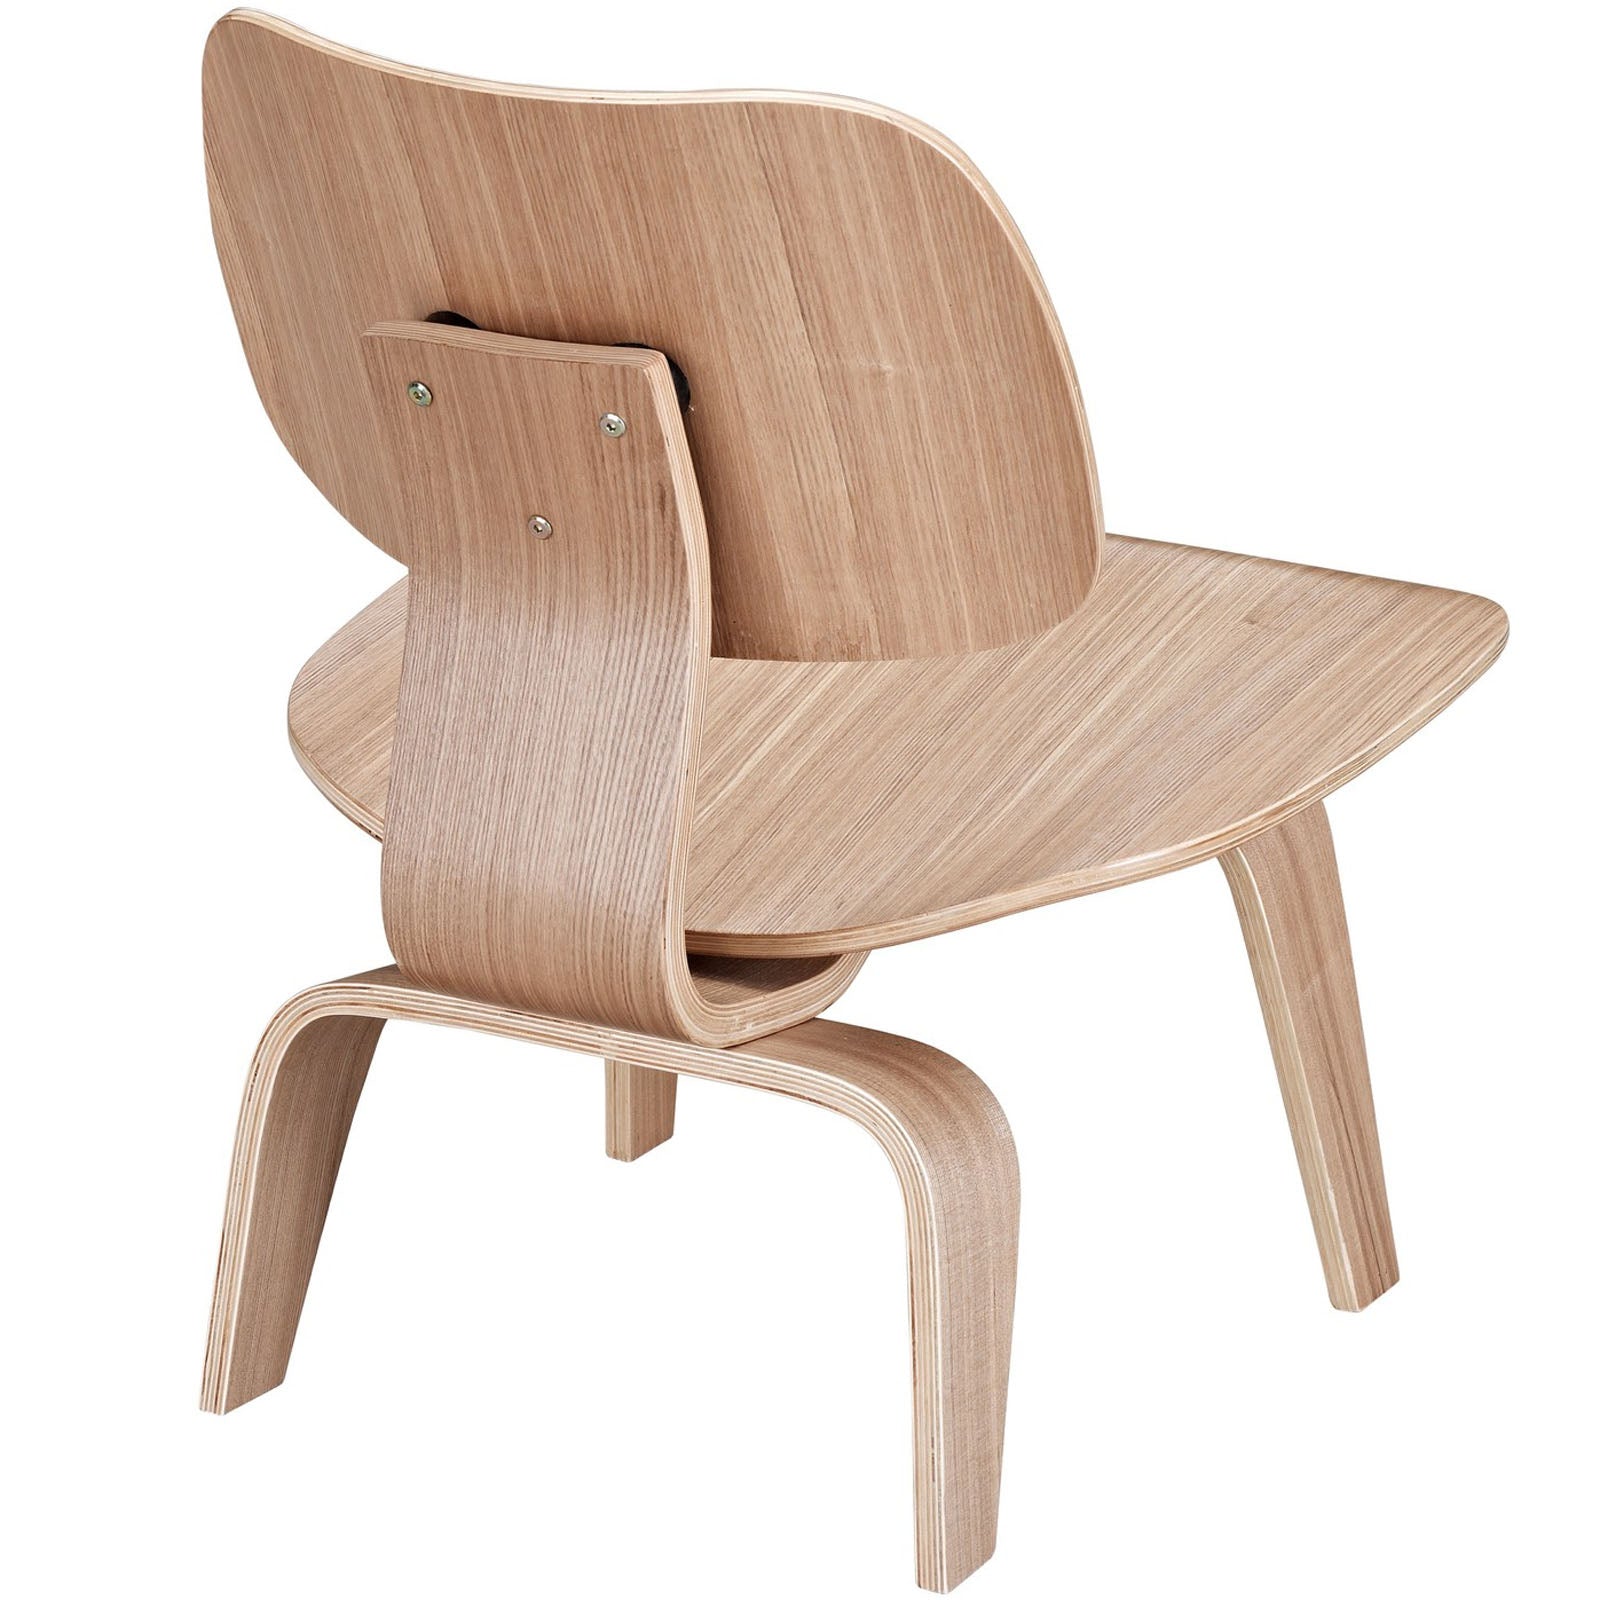 Fathom Wood Lounge Chair - East Shore Modern Home Furnishings